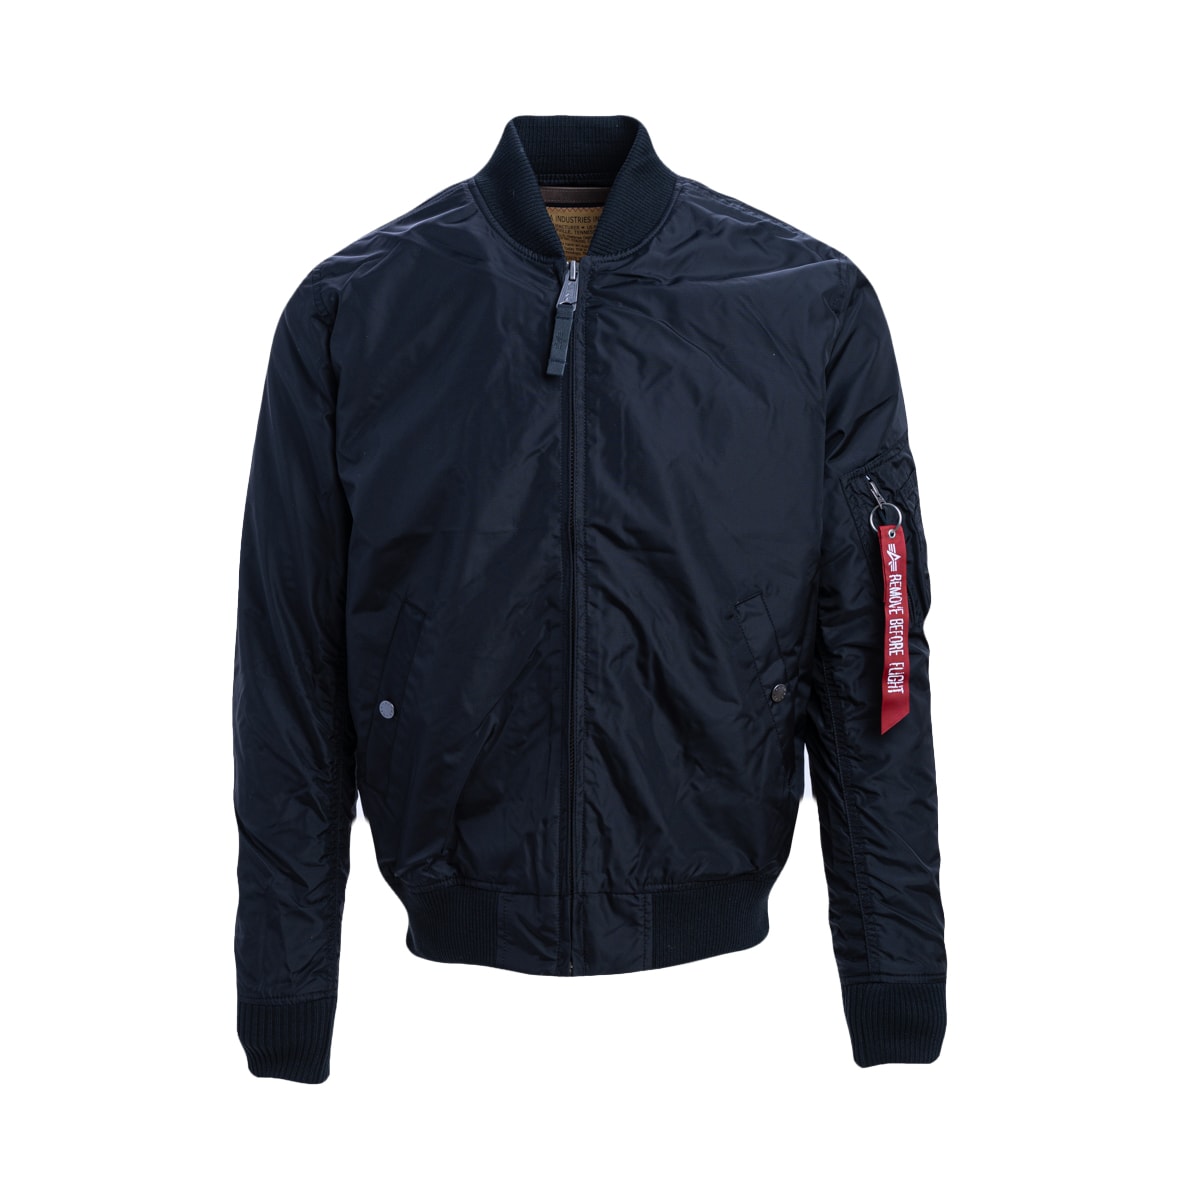 Alpha Industries Alpha Insustries Technical Fabric Jacket